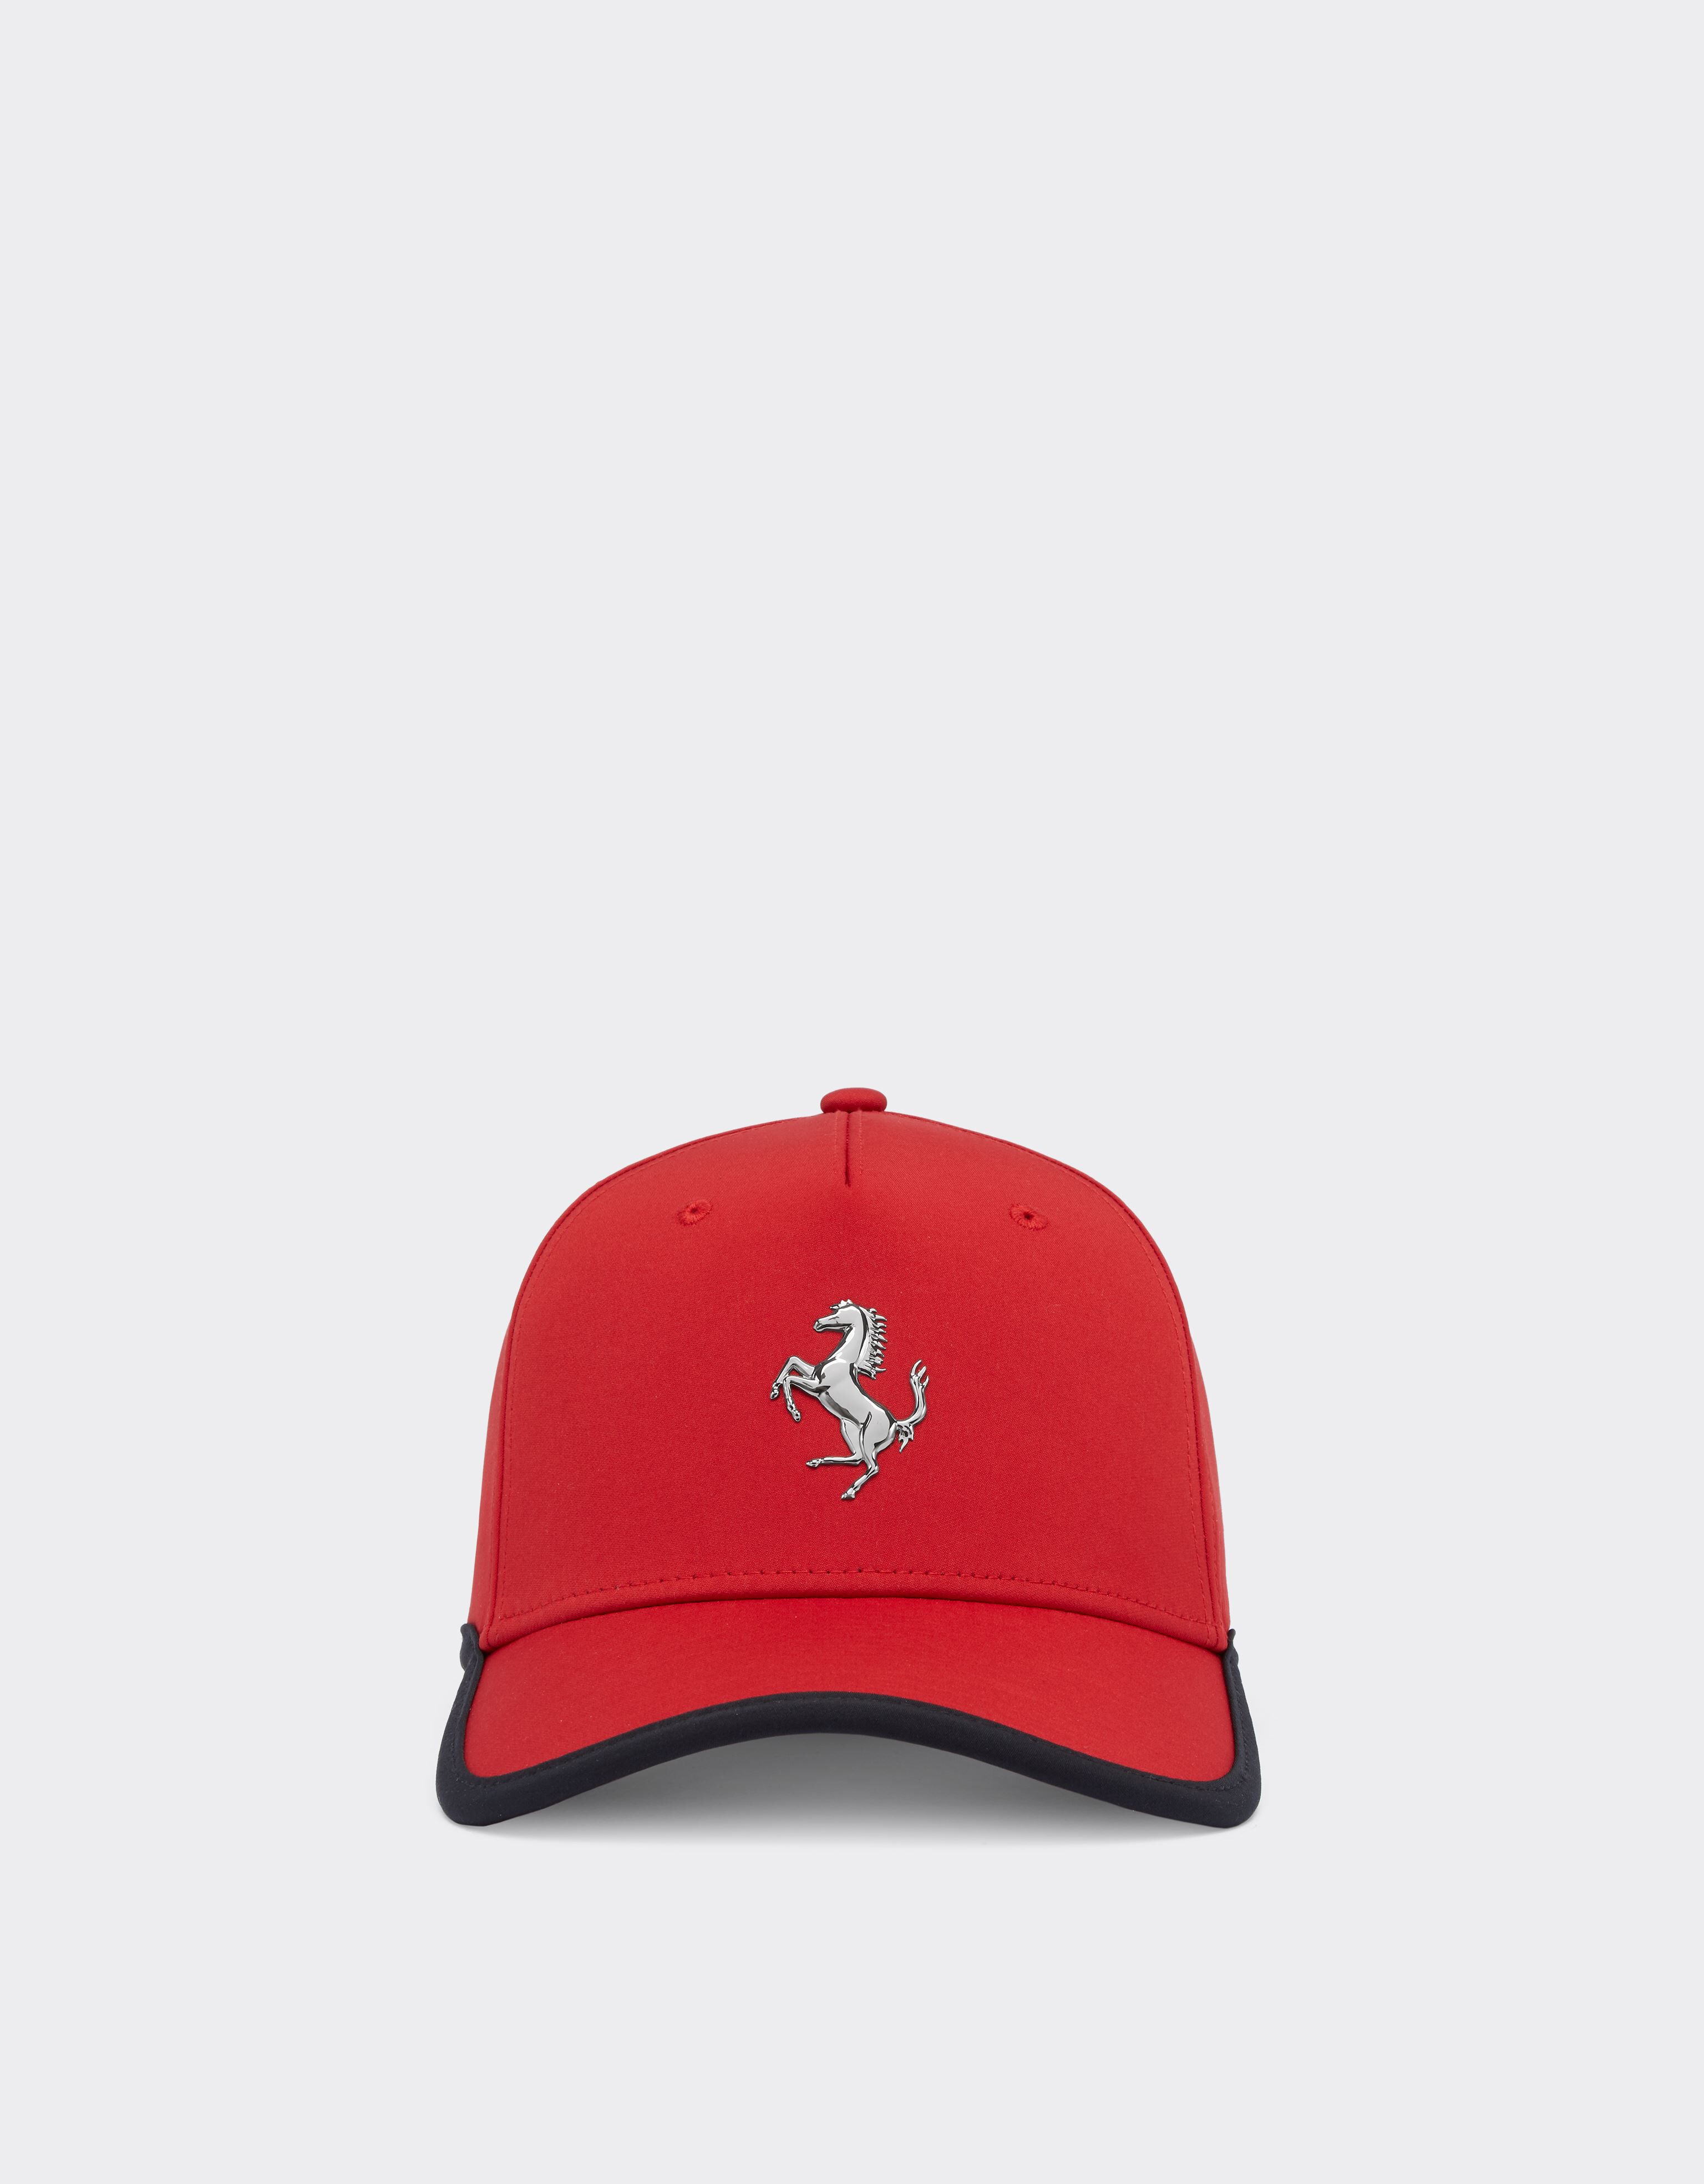 Ferrari Baseball cap with Prancing Horse detail Black 20070f